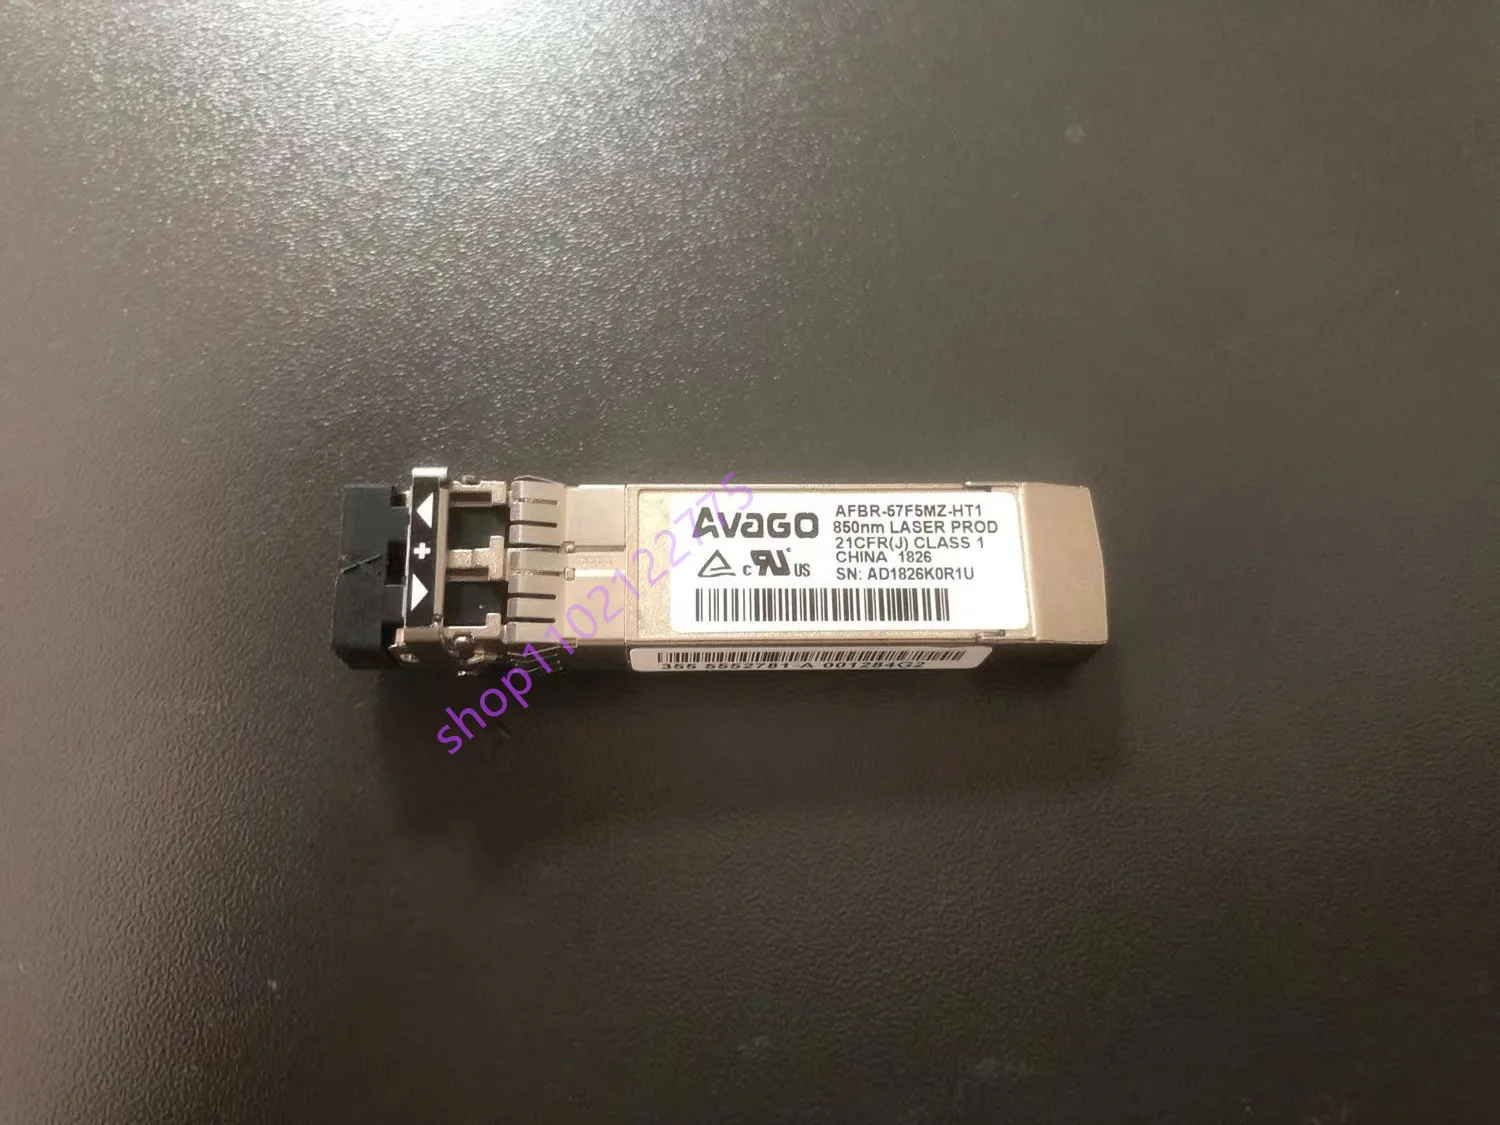 AVAGO SFP 16gb switch module AFBR-57F5MZ-HT1 335 5552781-A storage transceiver sfp 16g/16g fiber switch/16g sfp fiber module